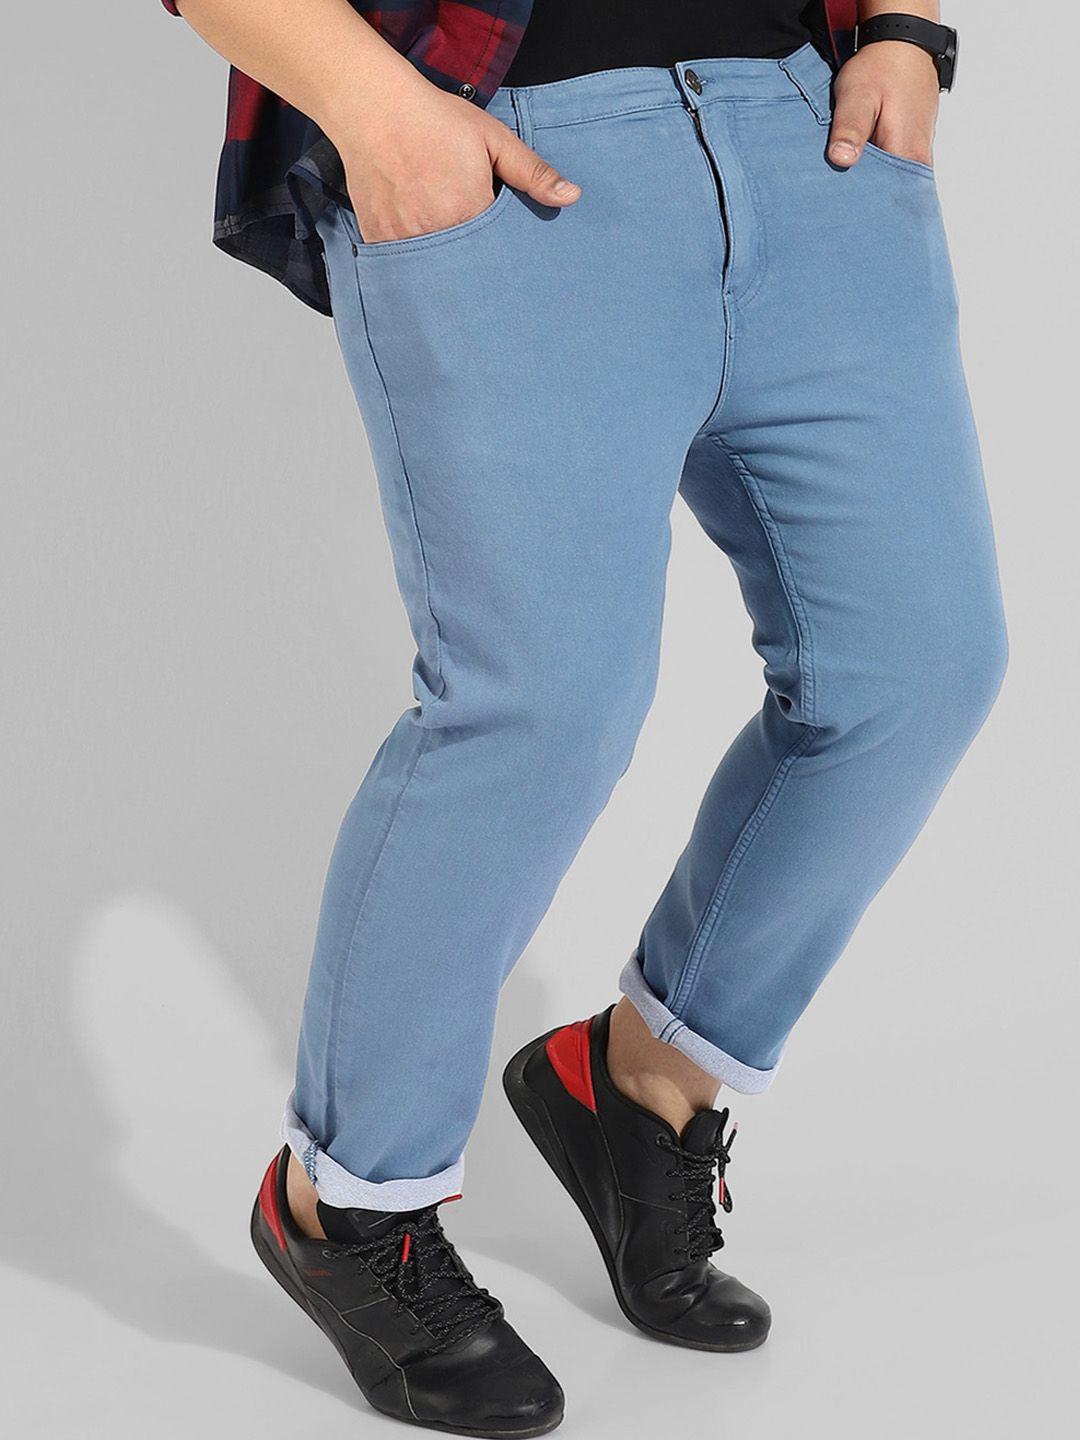 instafab plus men plus size classic relaxed fit stretchable cotton jeans